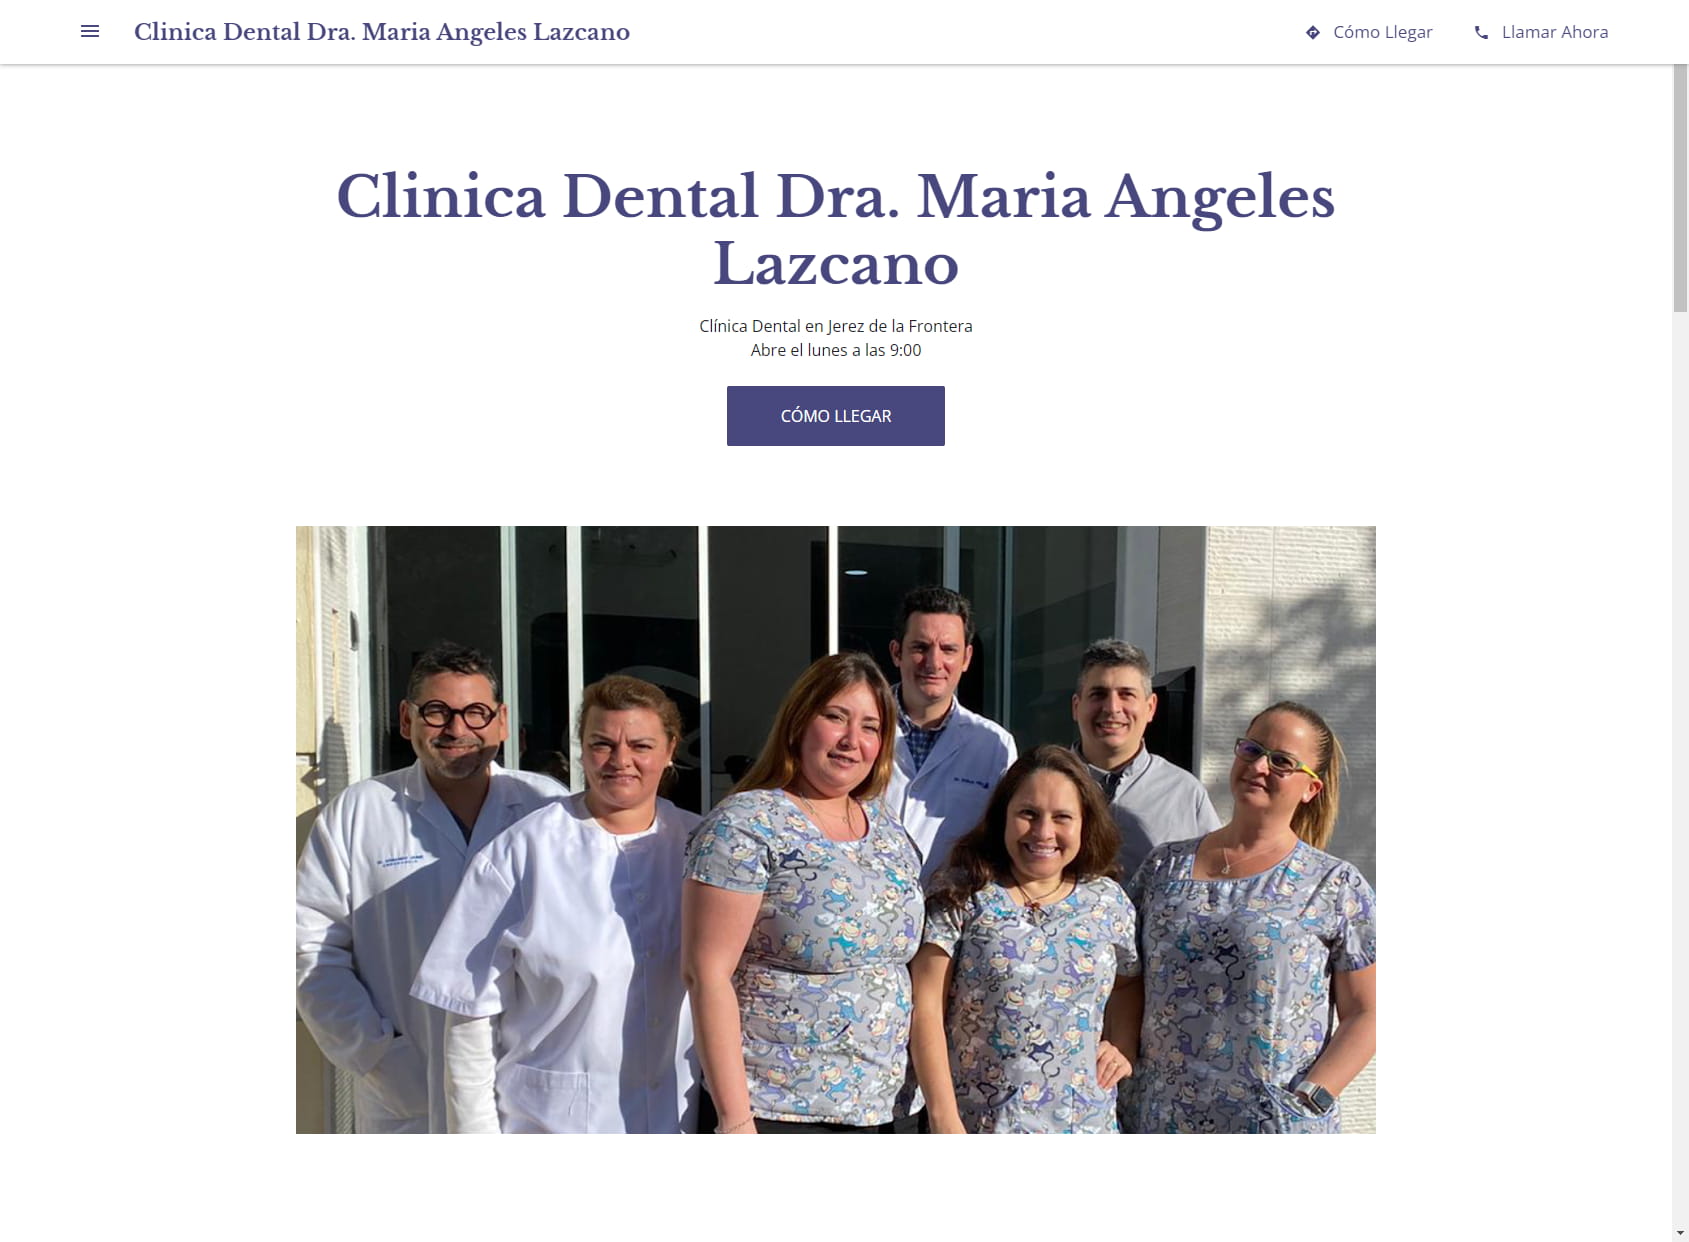 Clinica Dental Dra. Maria Angeles Lazcano